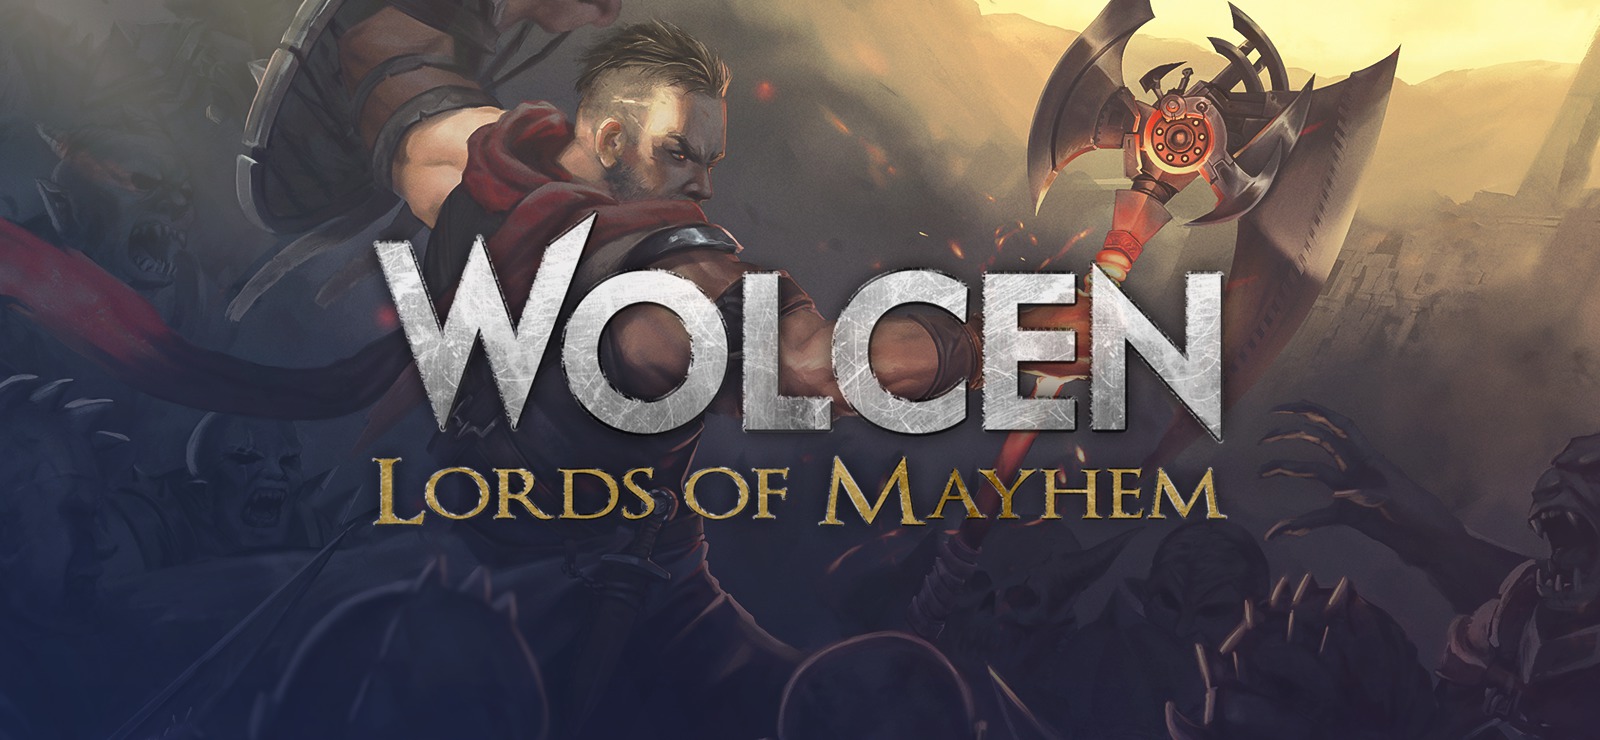 Wolcen: Lords Of Mayhem Backgrounds on Wallpapers Vista